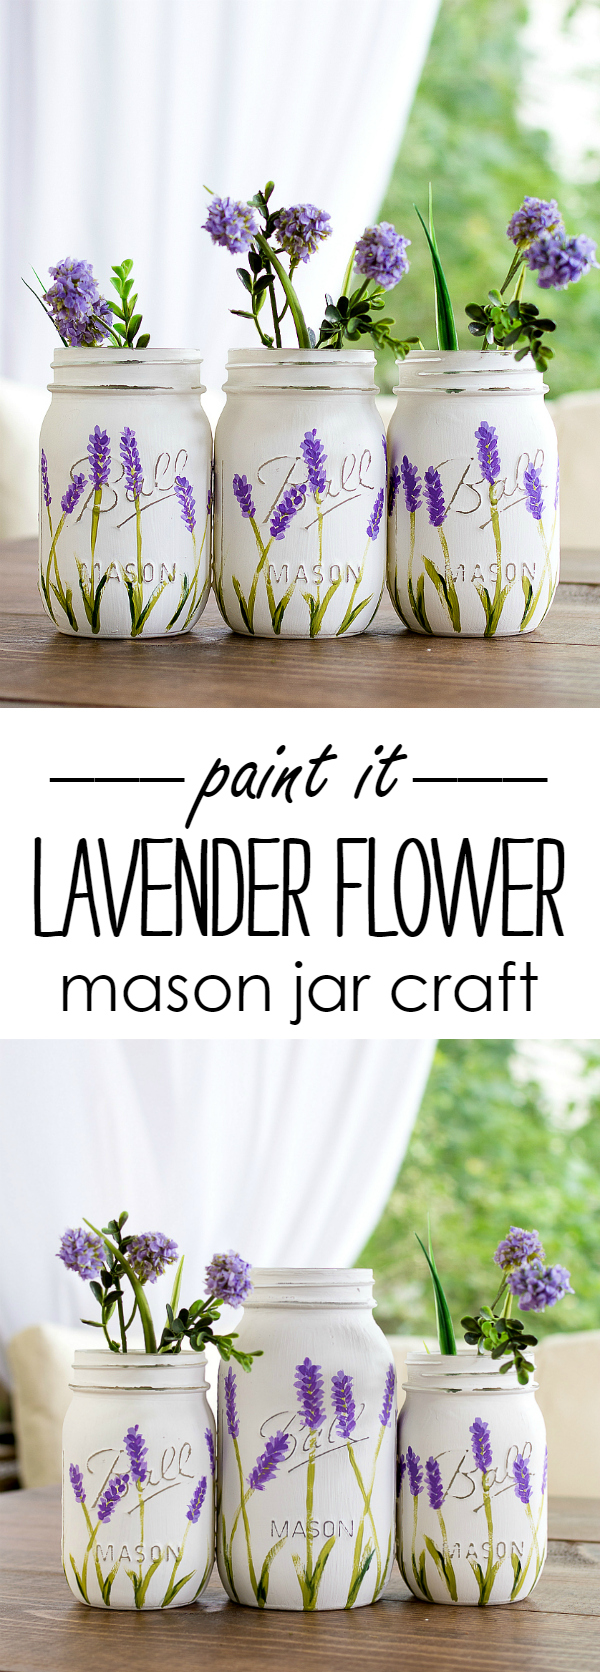 Mason Jar Craft Ideas with Paint